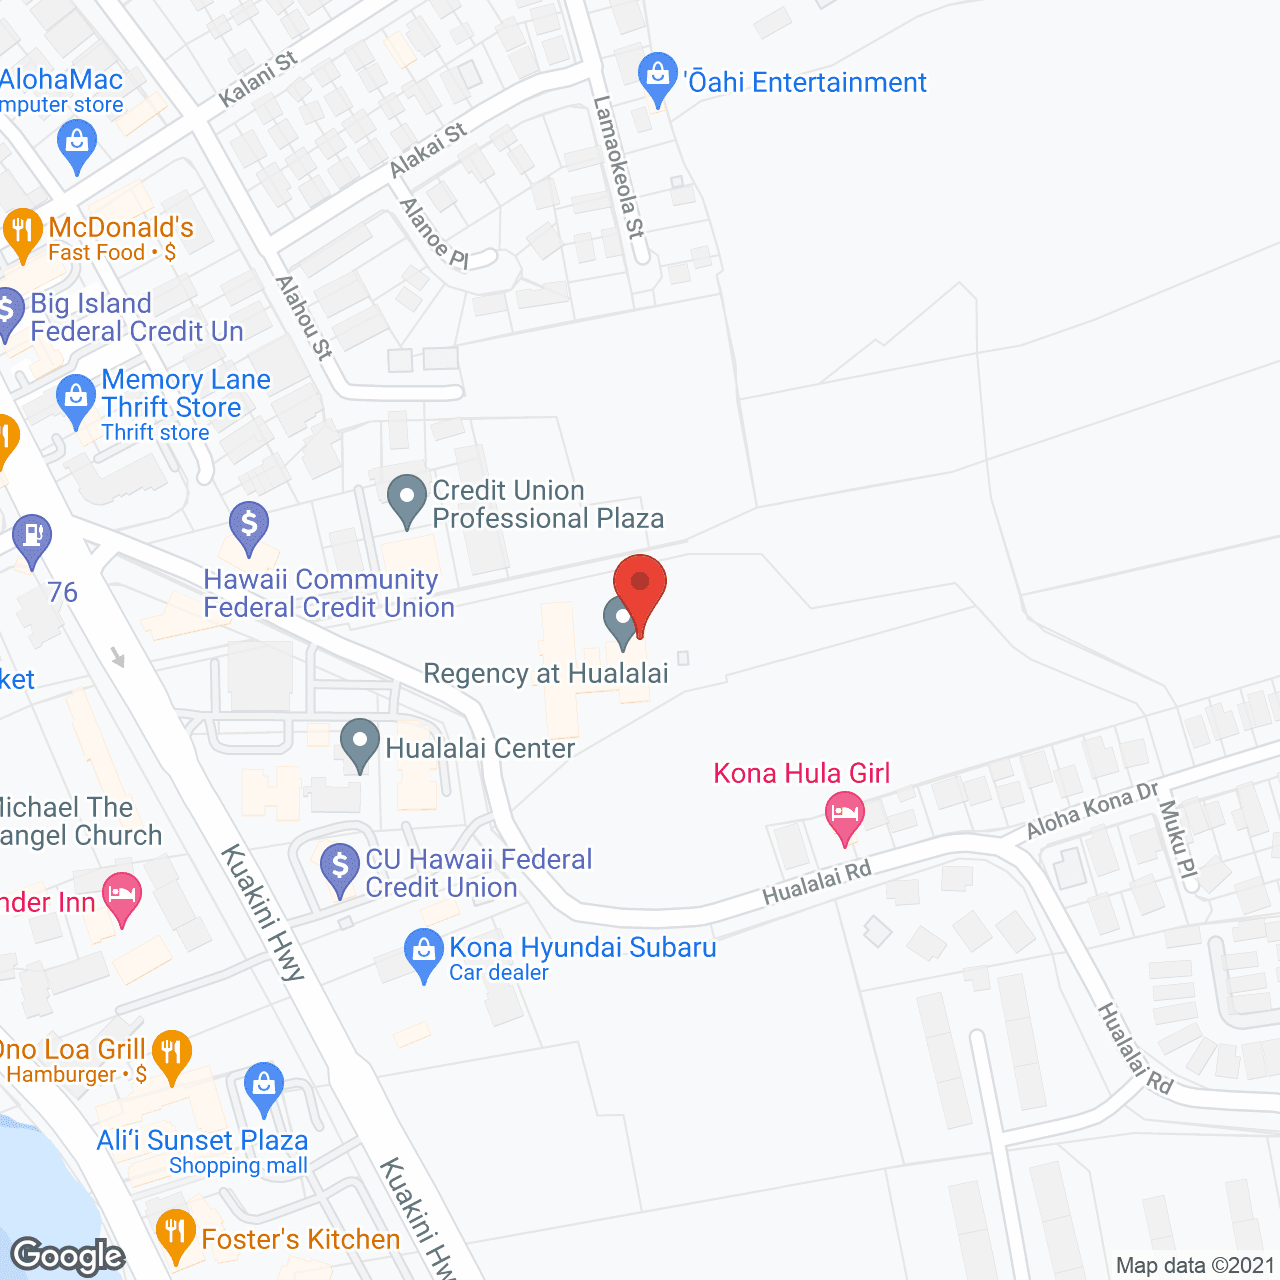 Regency at Hualalai in google map